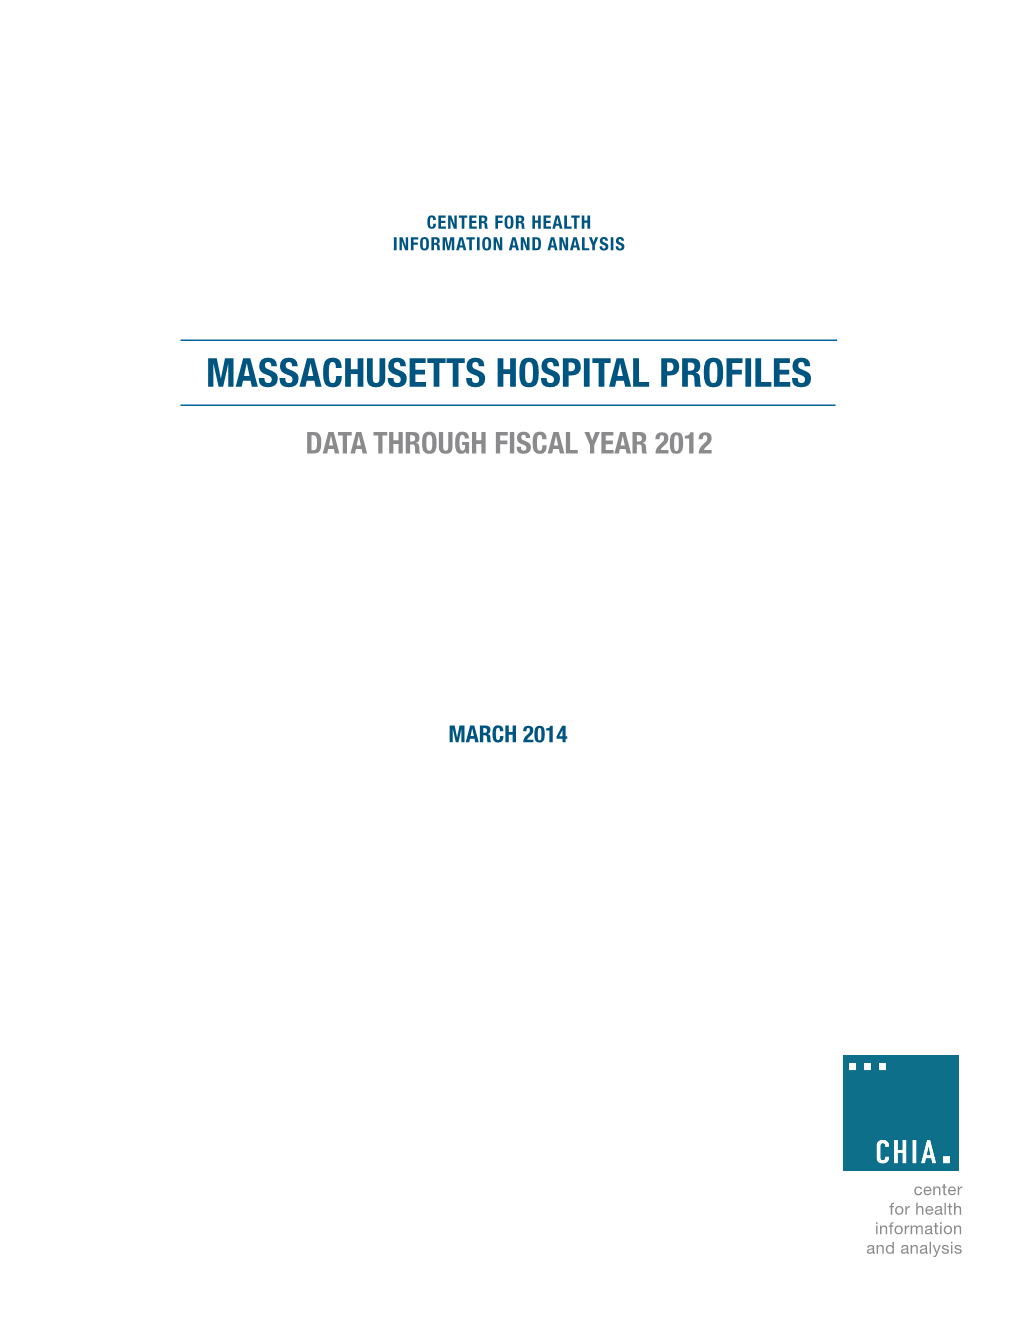 Massachusetts Hospital Profiles